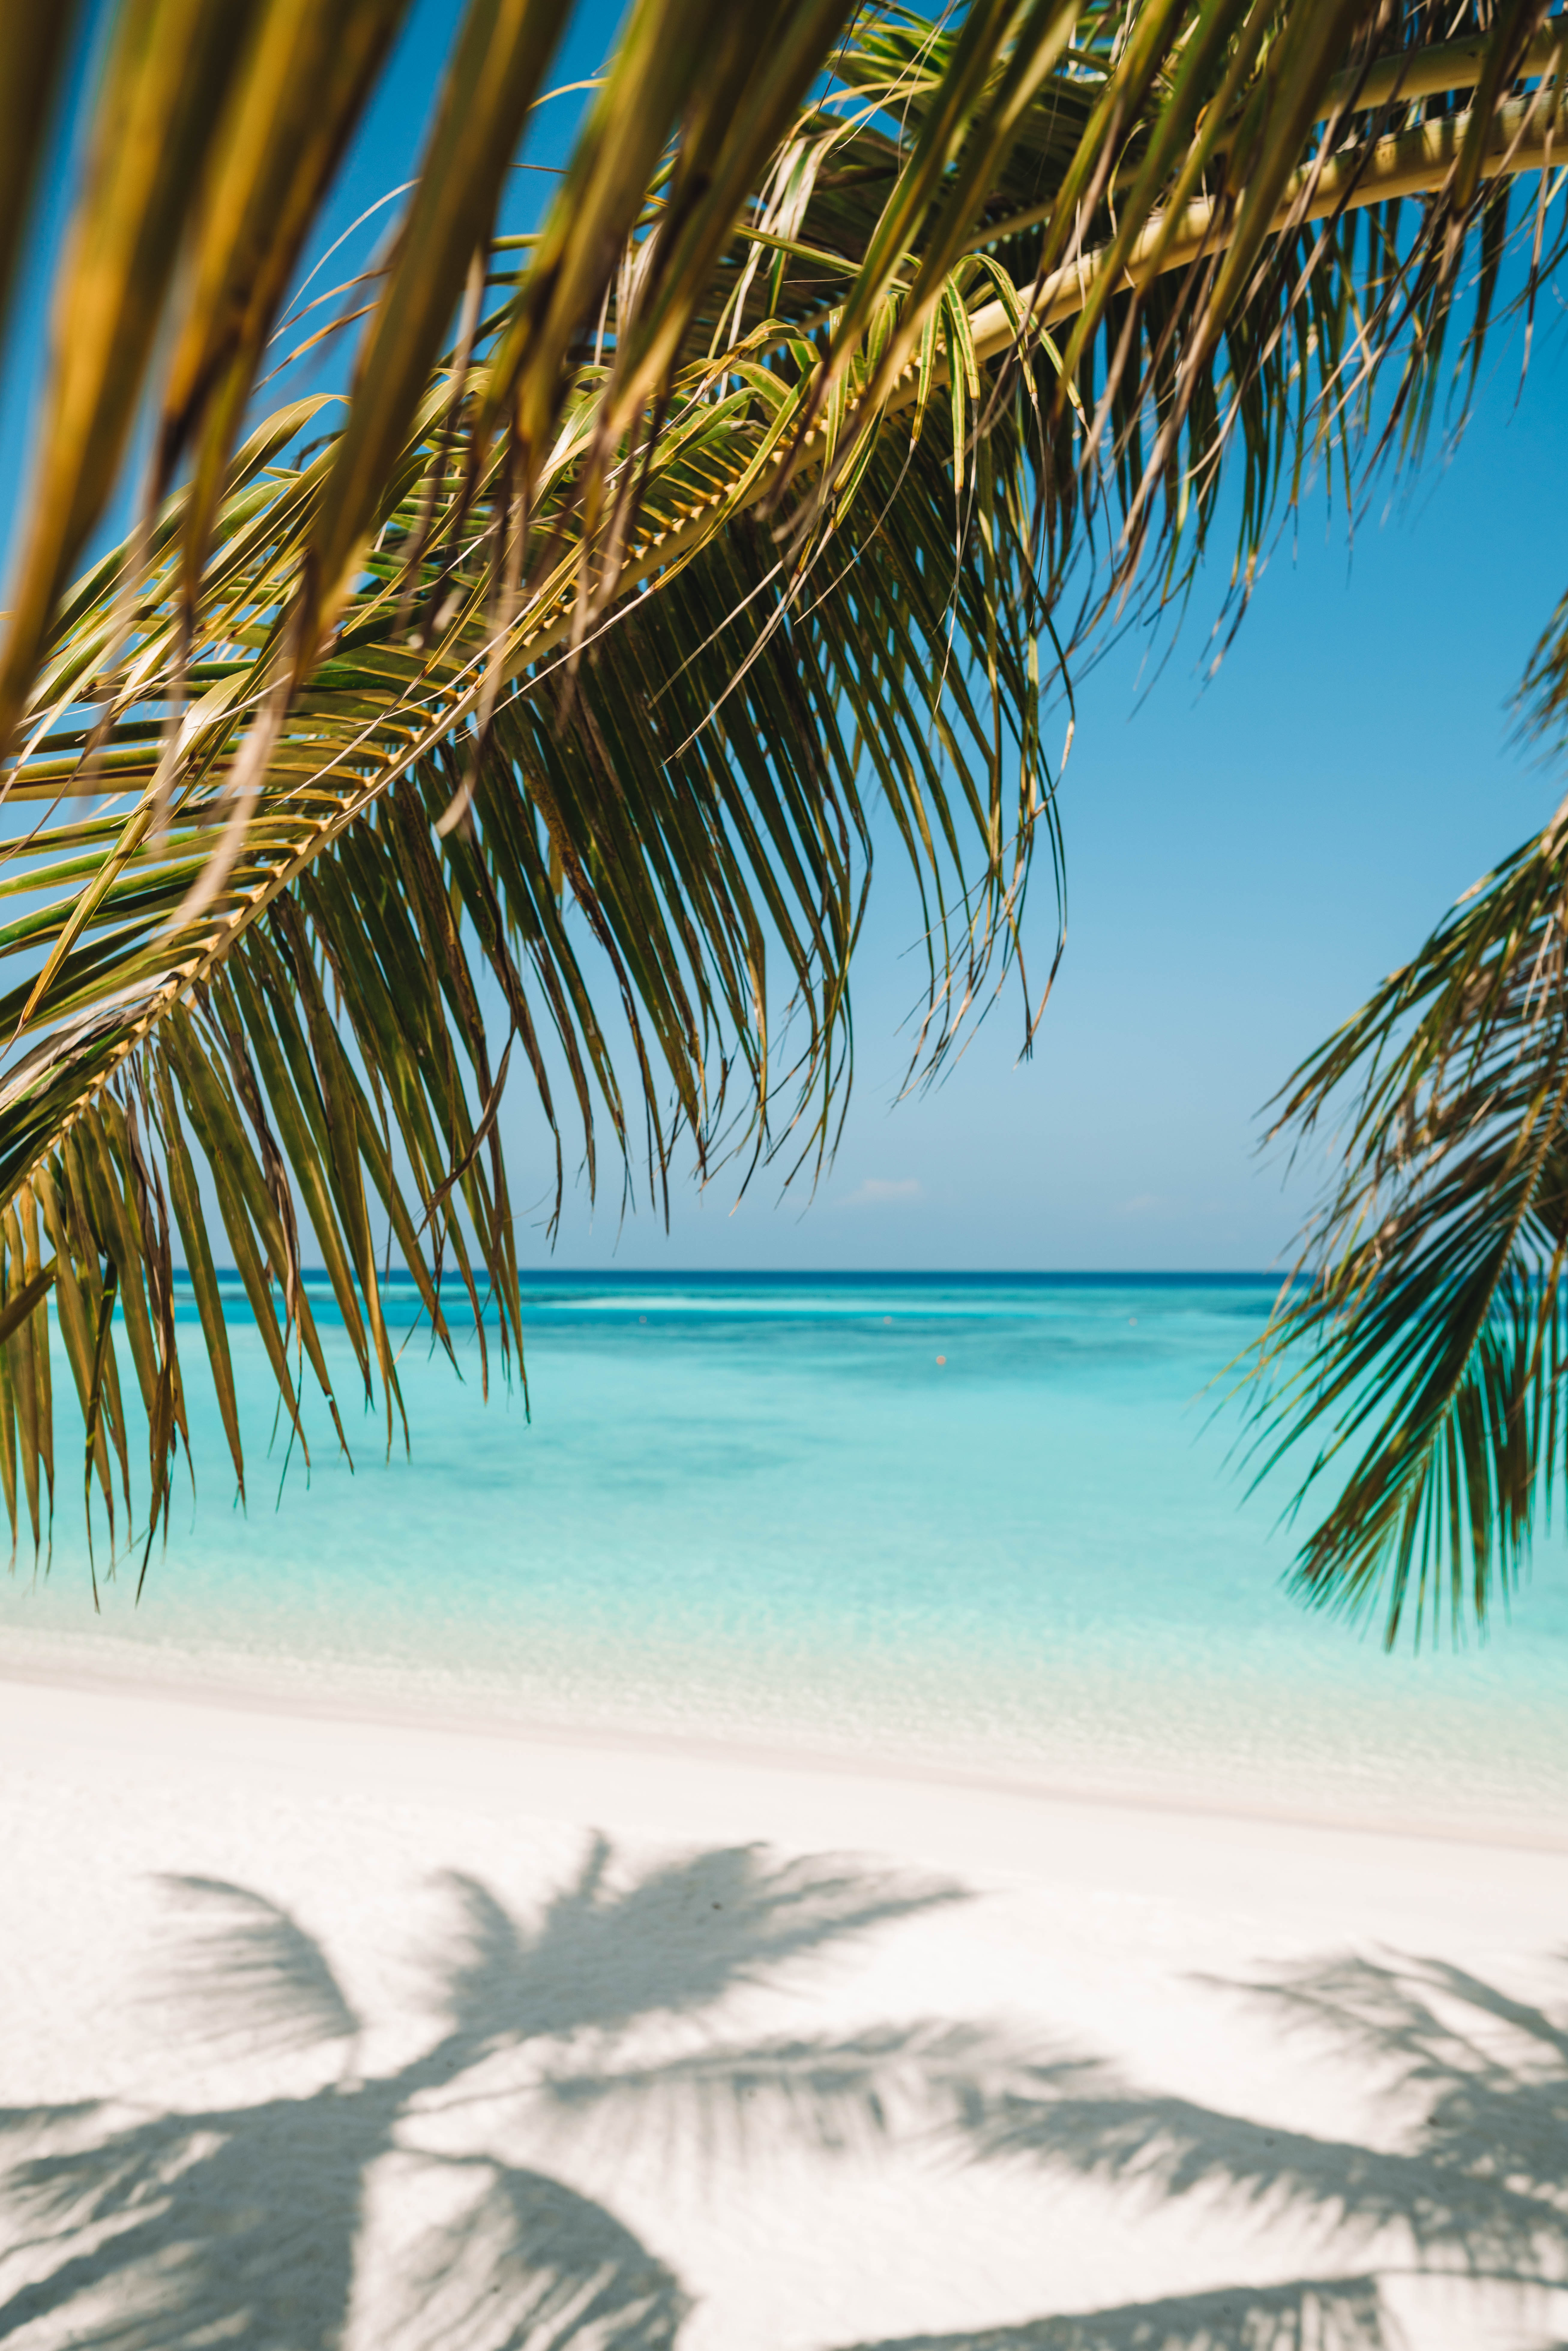 palm tree view of beach